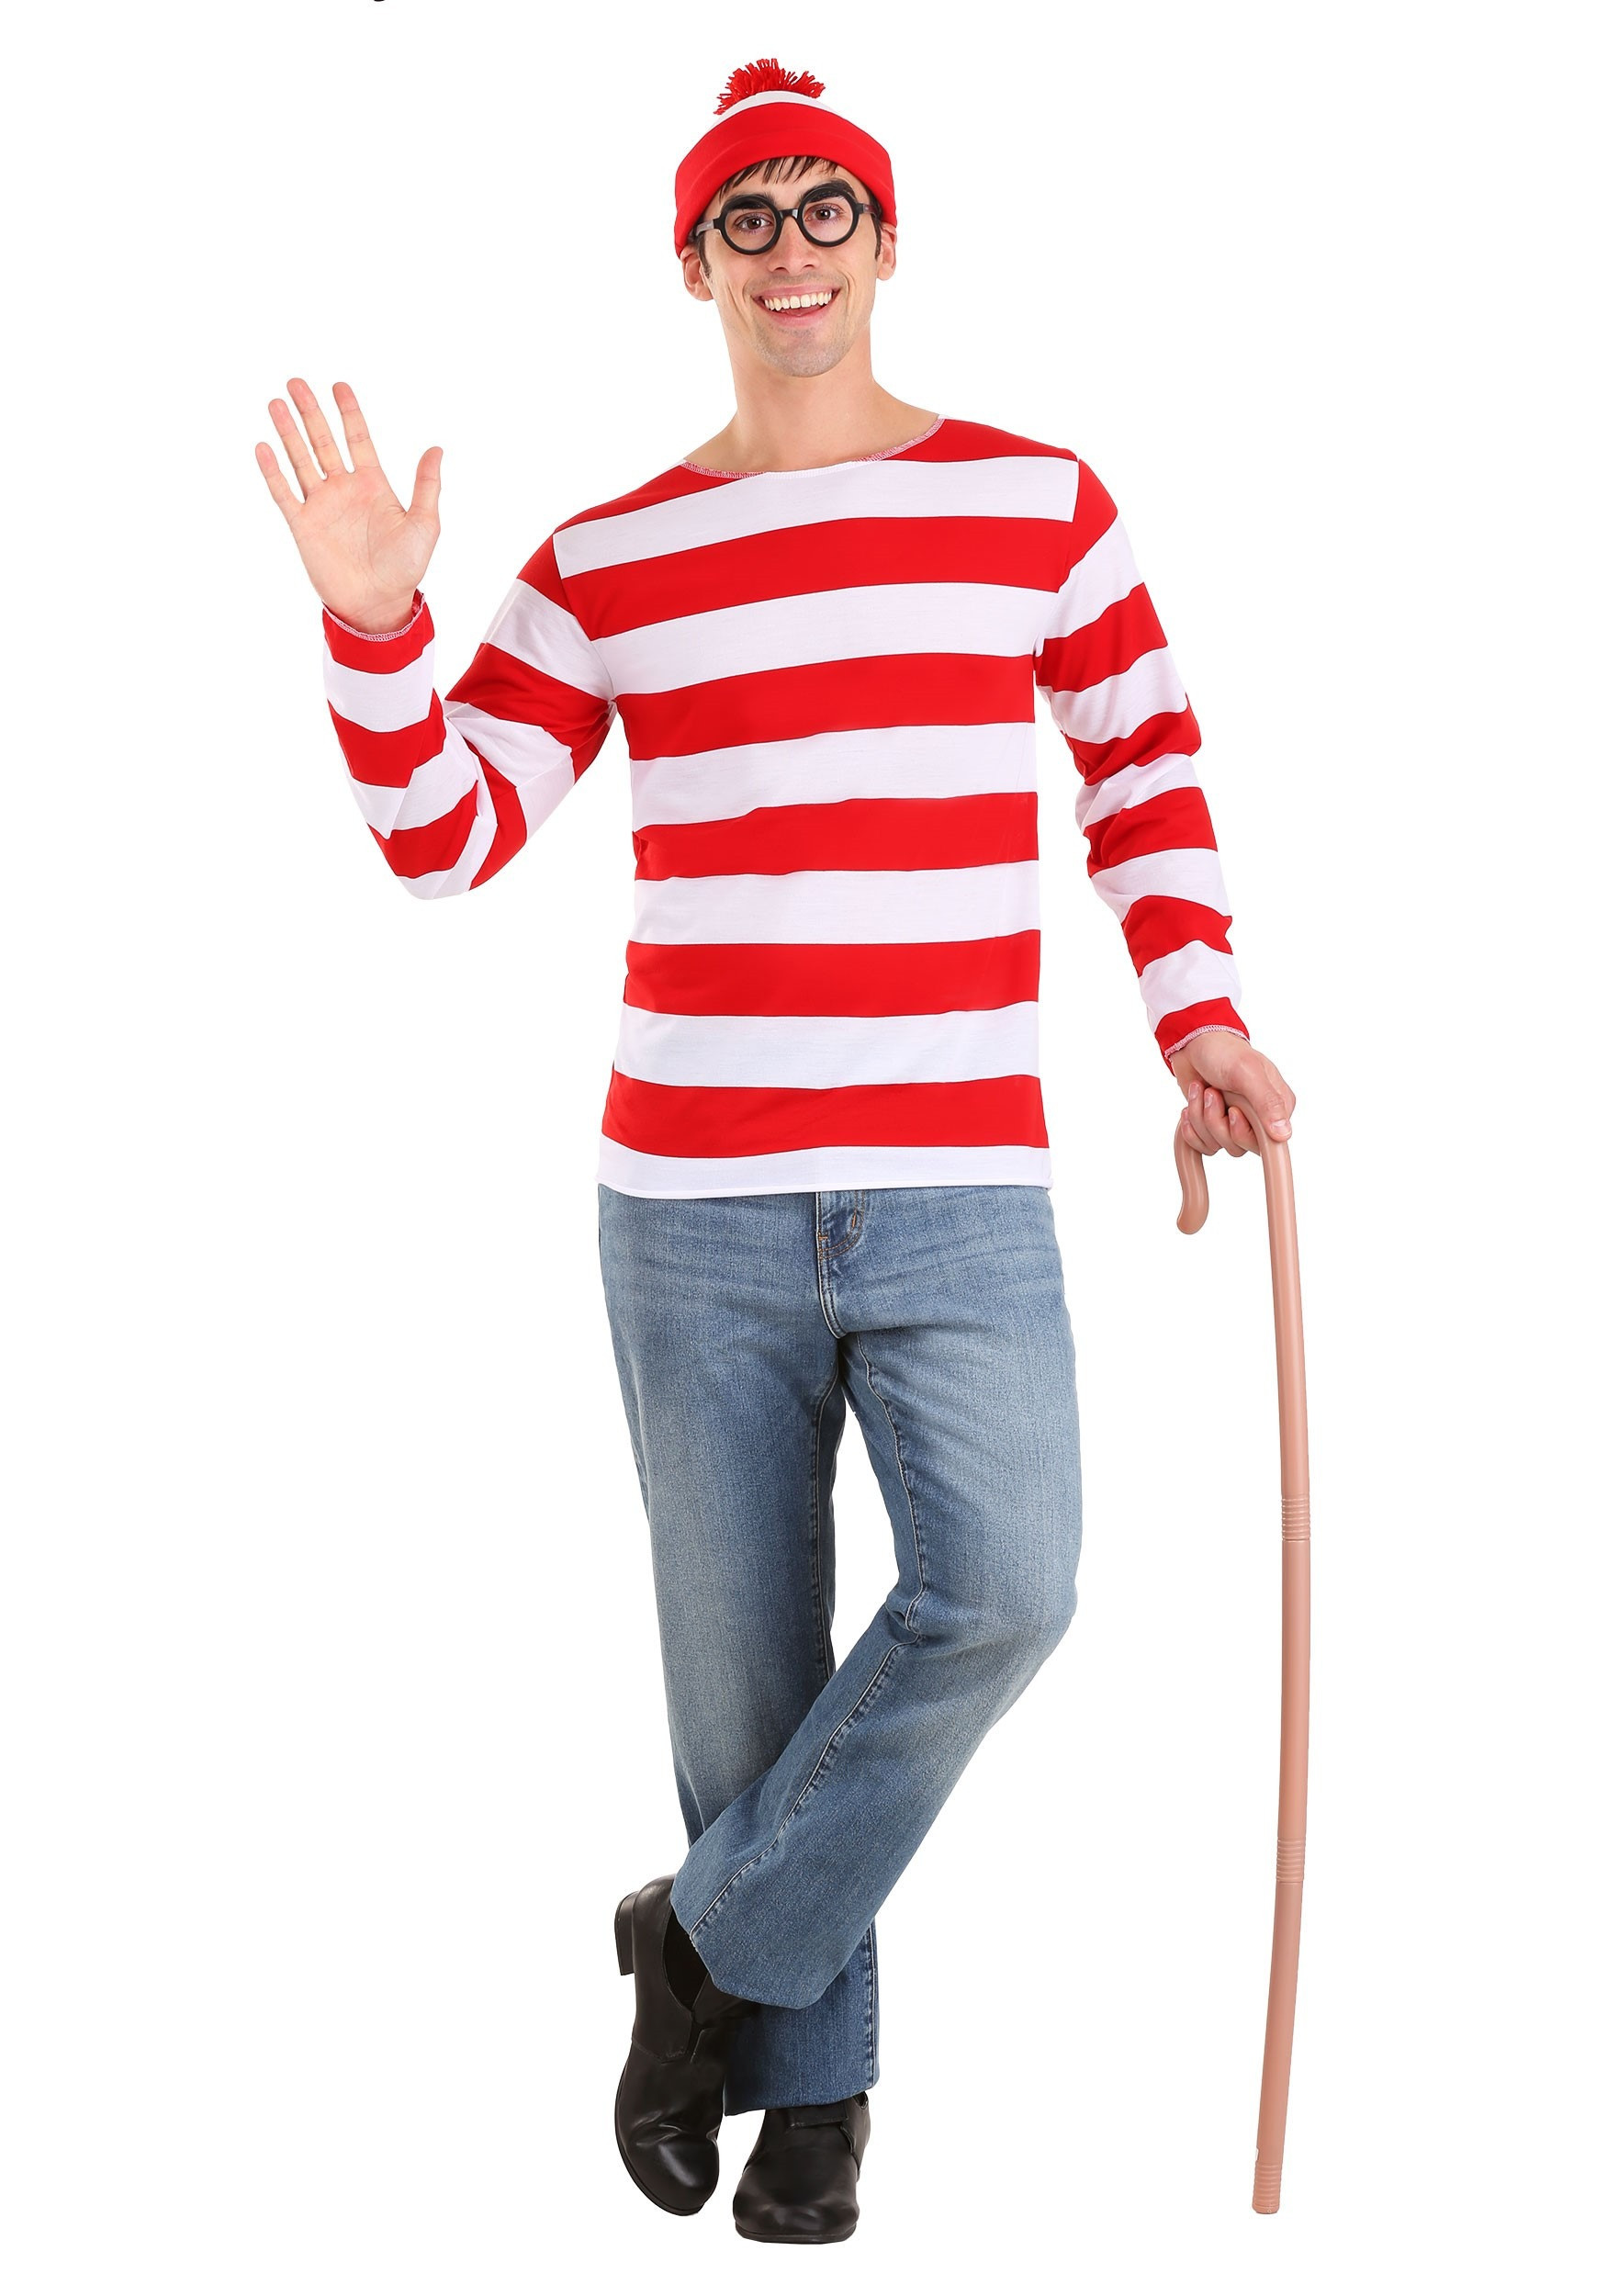 DIY Guy Halloween Costumes
 Where’s Waldo Costume